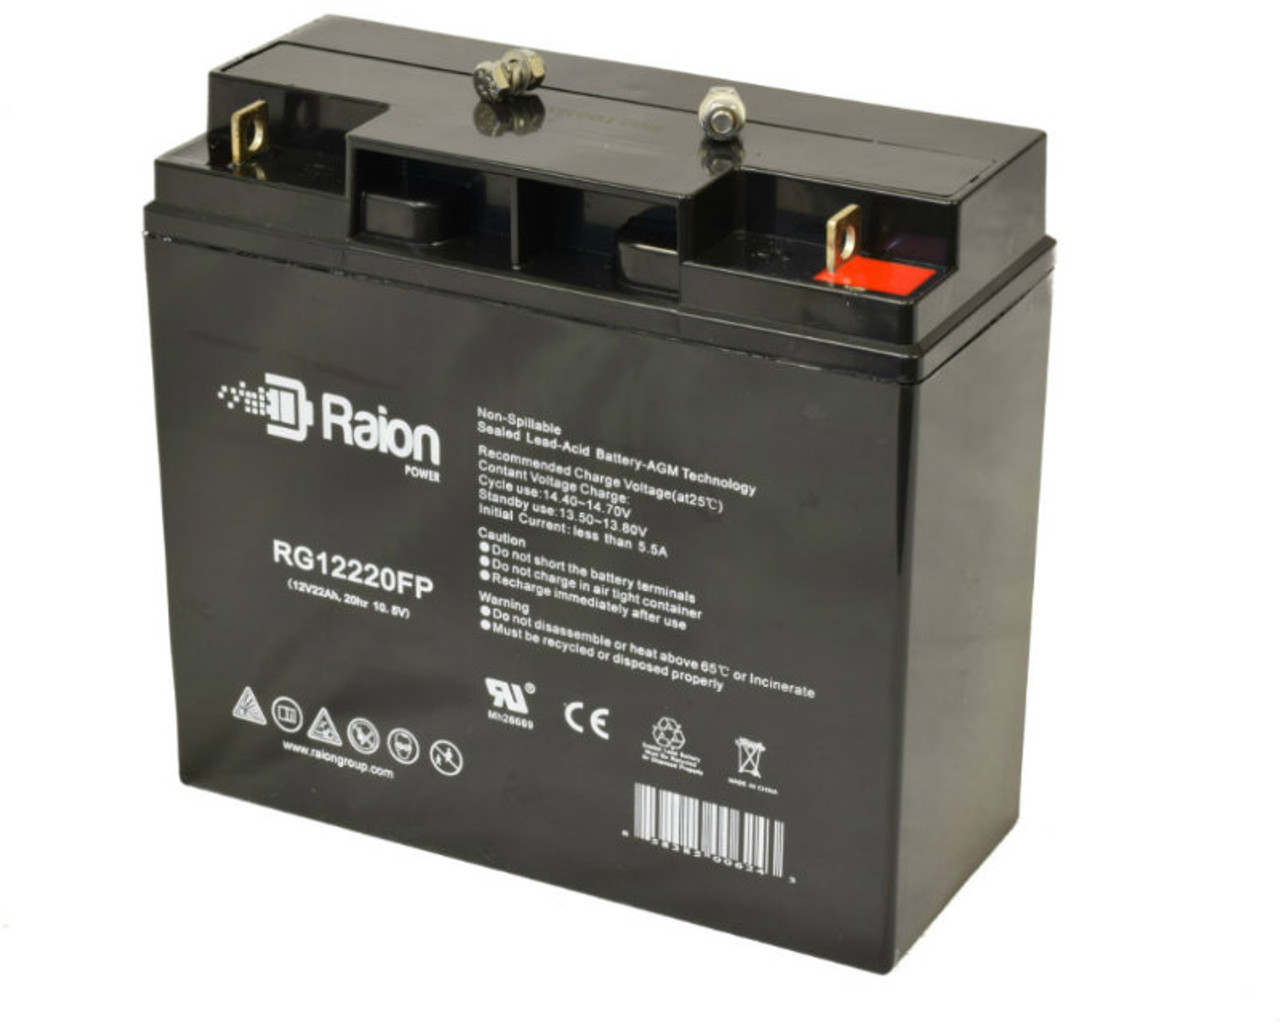 Raion Power Replacement 12V 22Ah Battery for NPower 457402 500A Jump Starter - 1 Pack